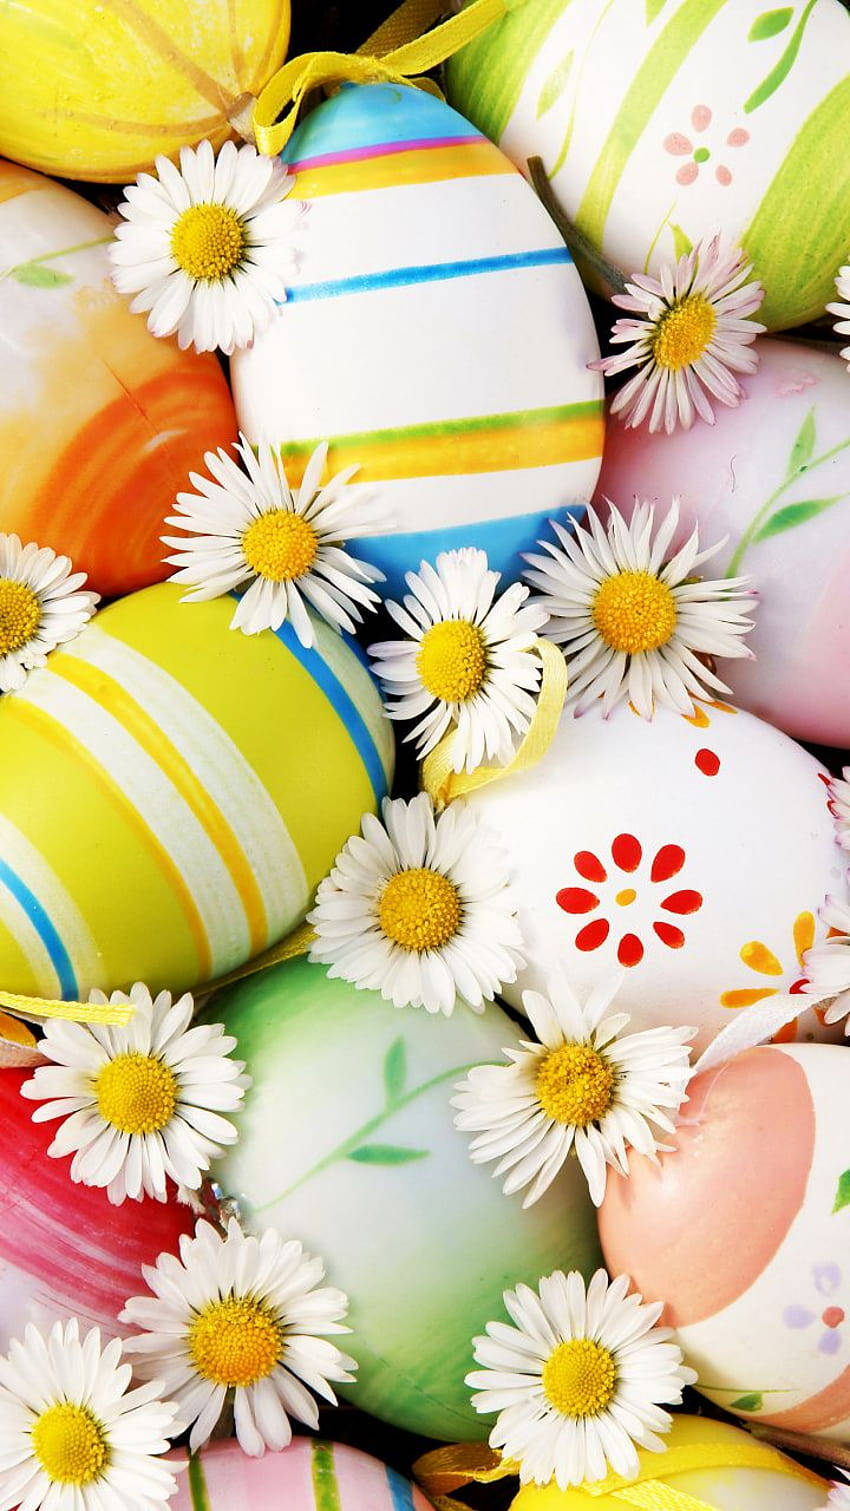 Æg med påskeliljer og blomster Wallpaper